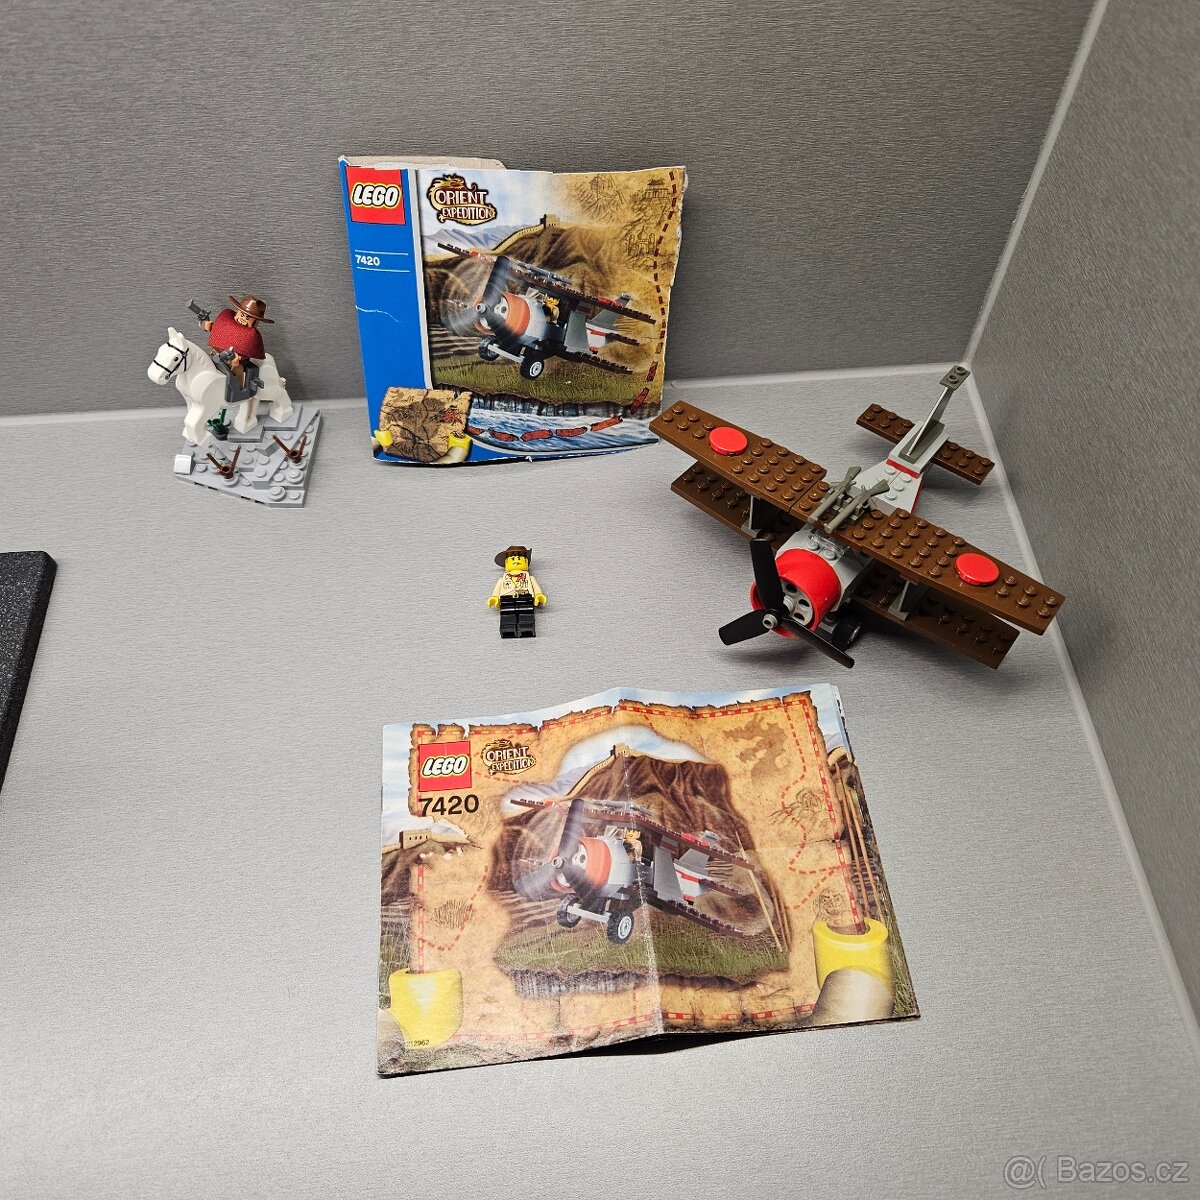 LEGO Orient Expedition 7420 Thunder Blazer Plane